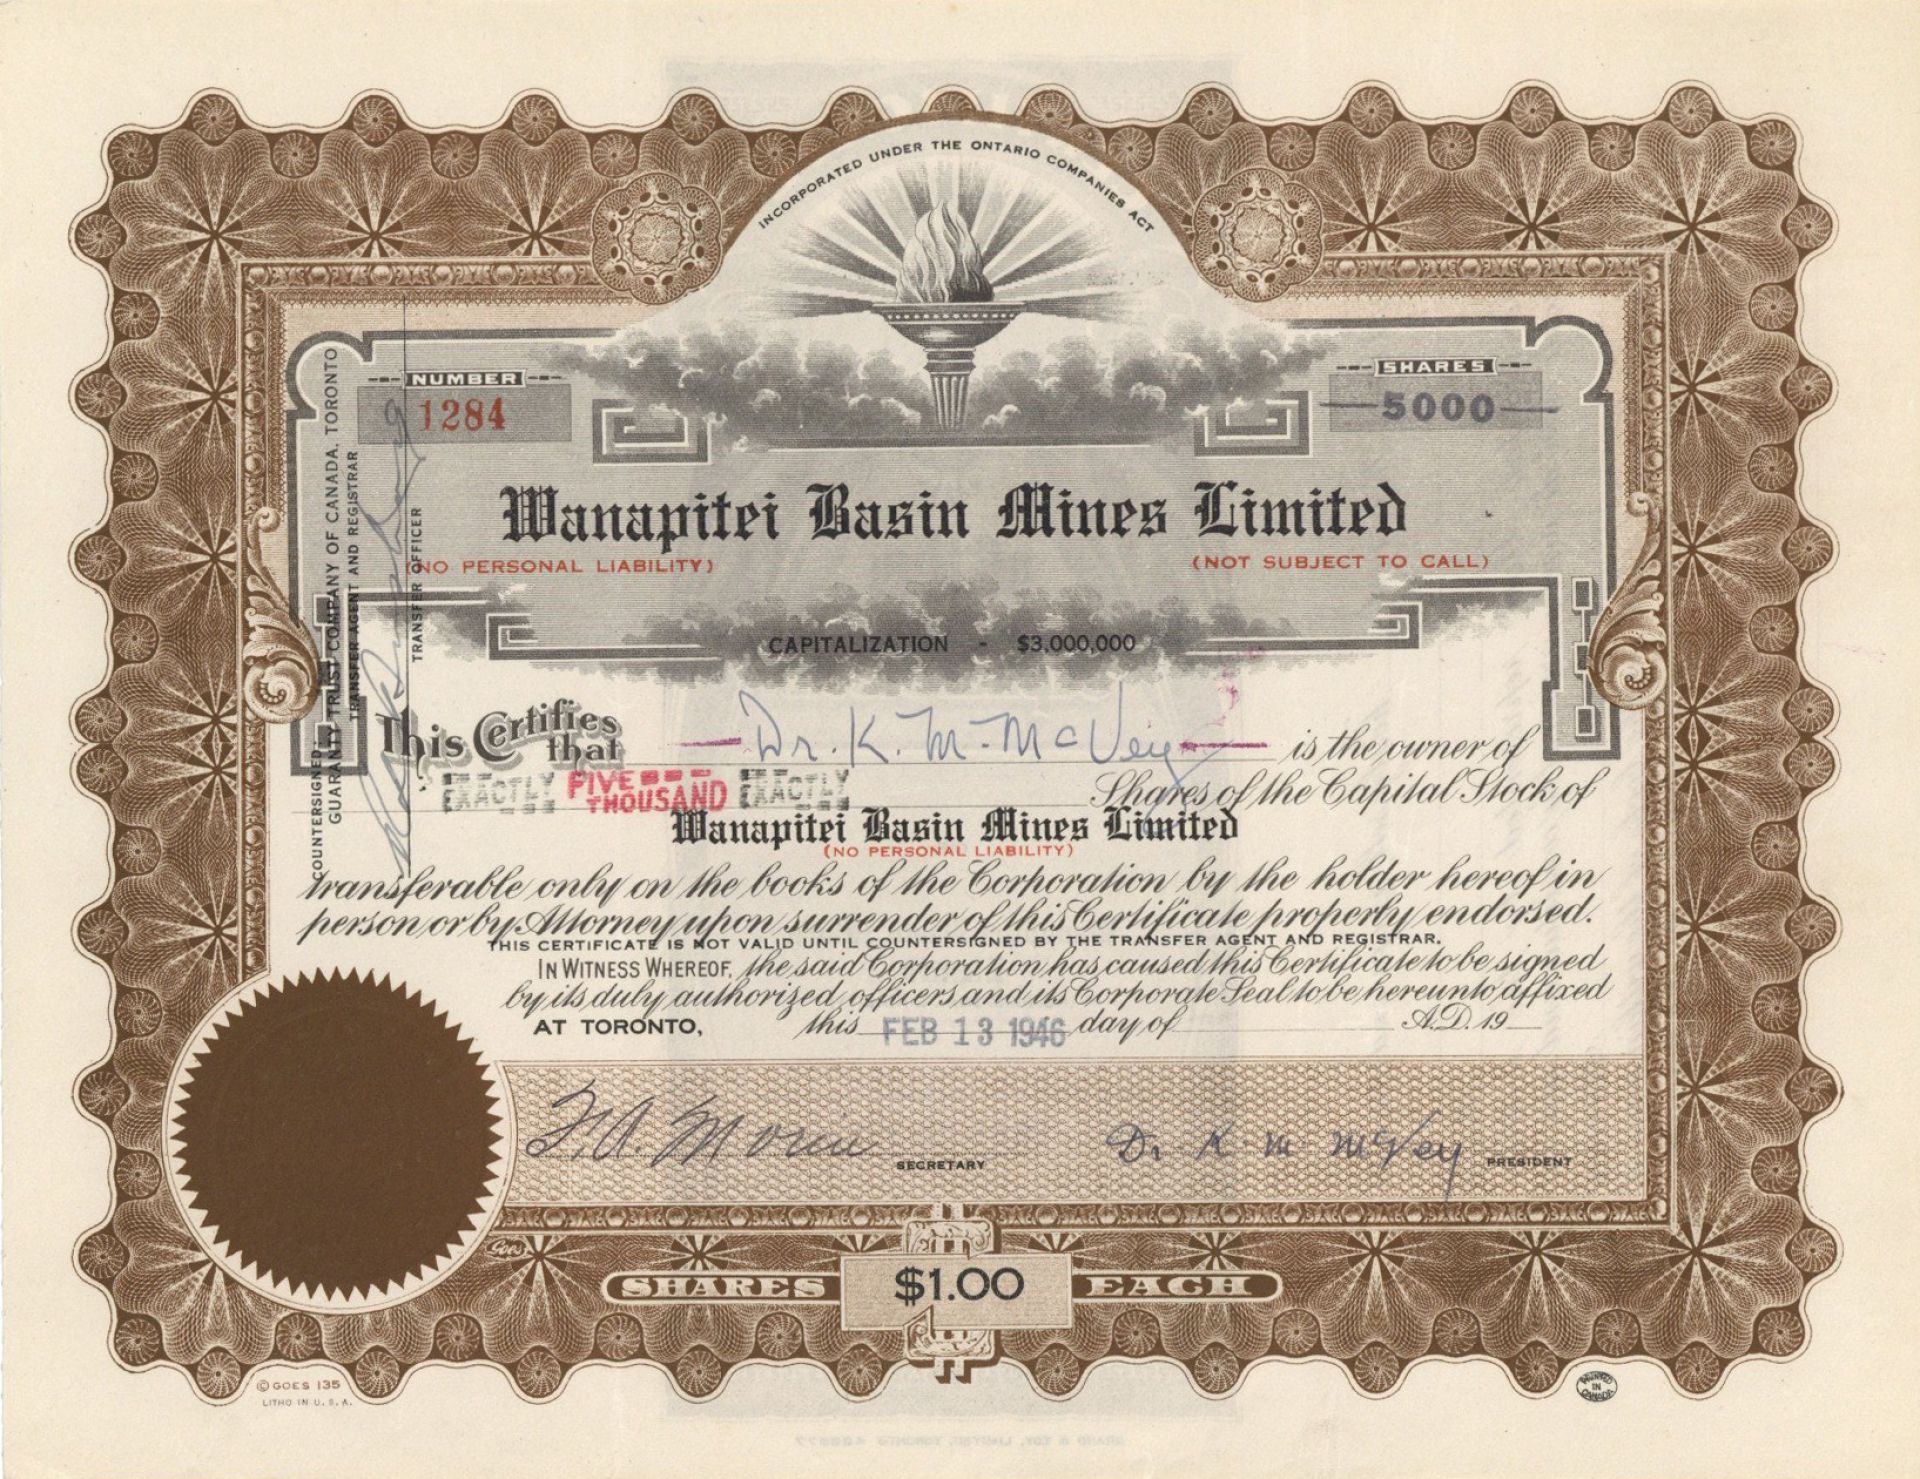 Wanapitei Basin Mines Limited - Canadian Mining Stock Certificate